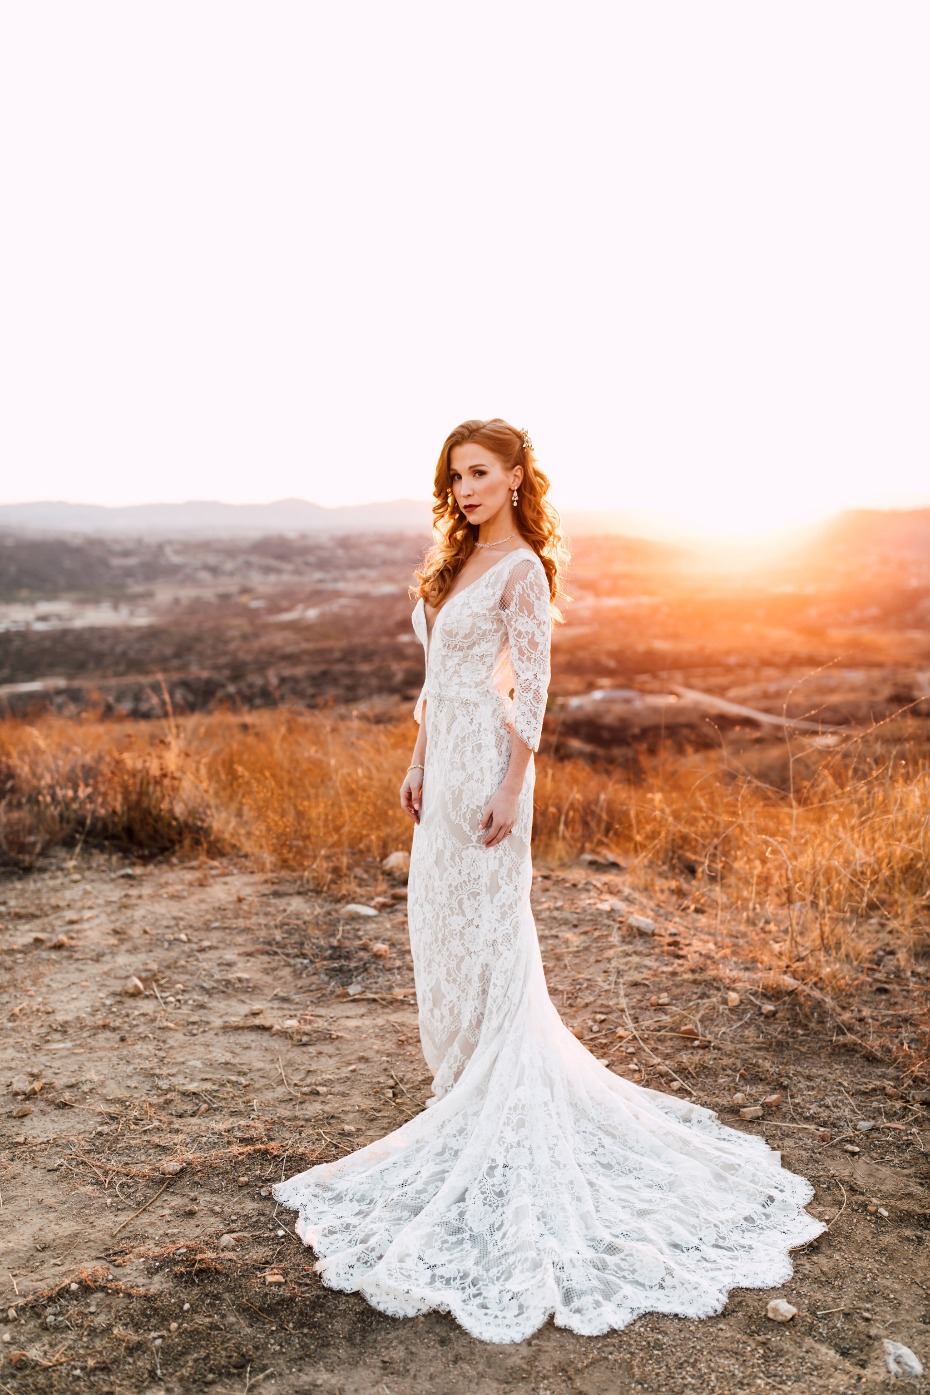 Gorgeous lace wedding dress